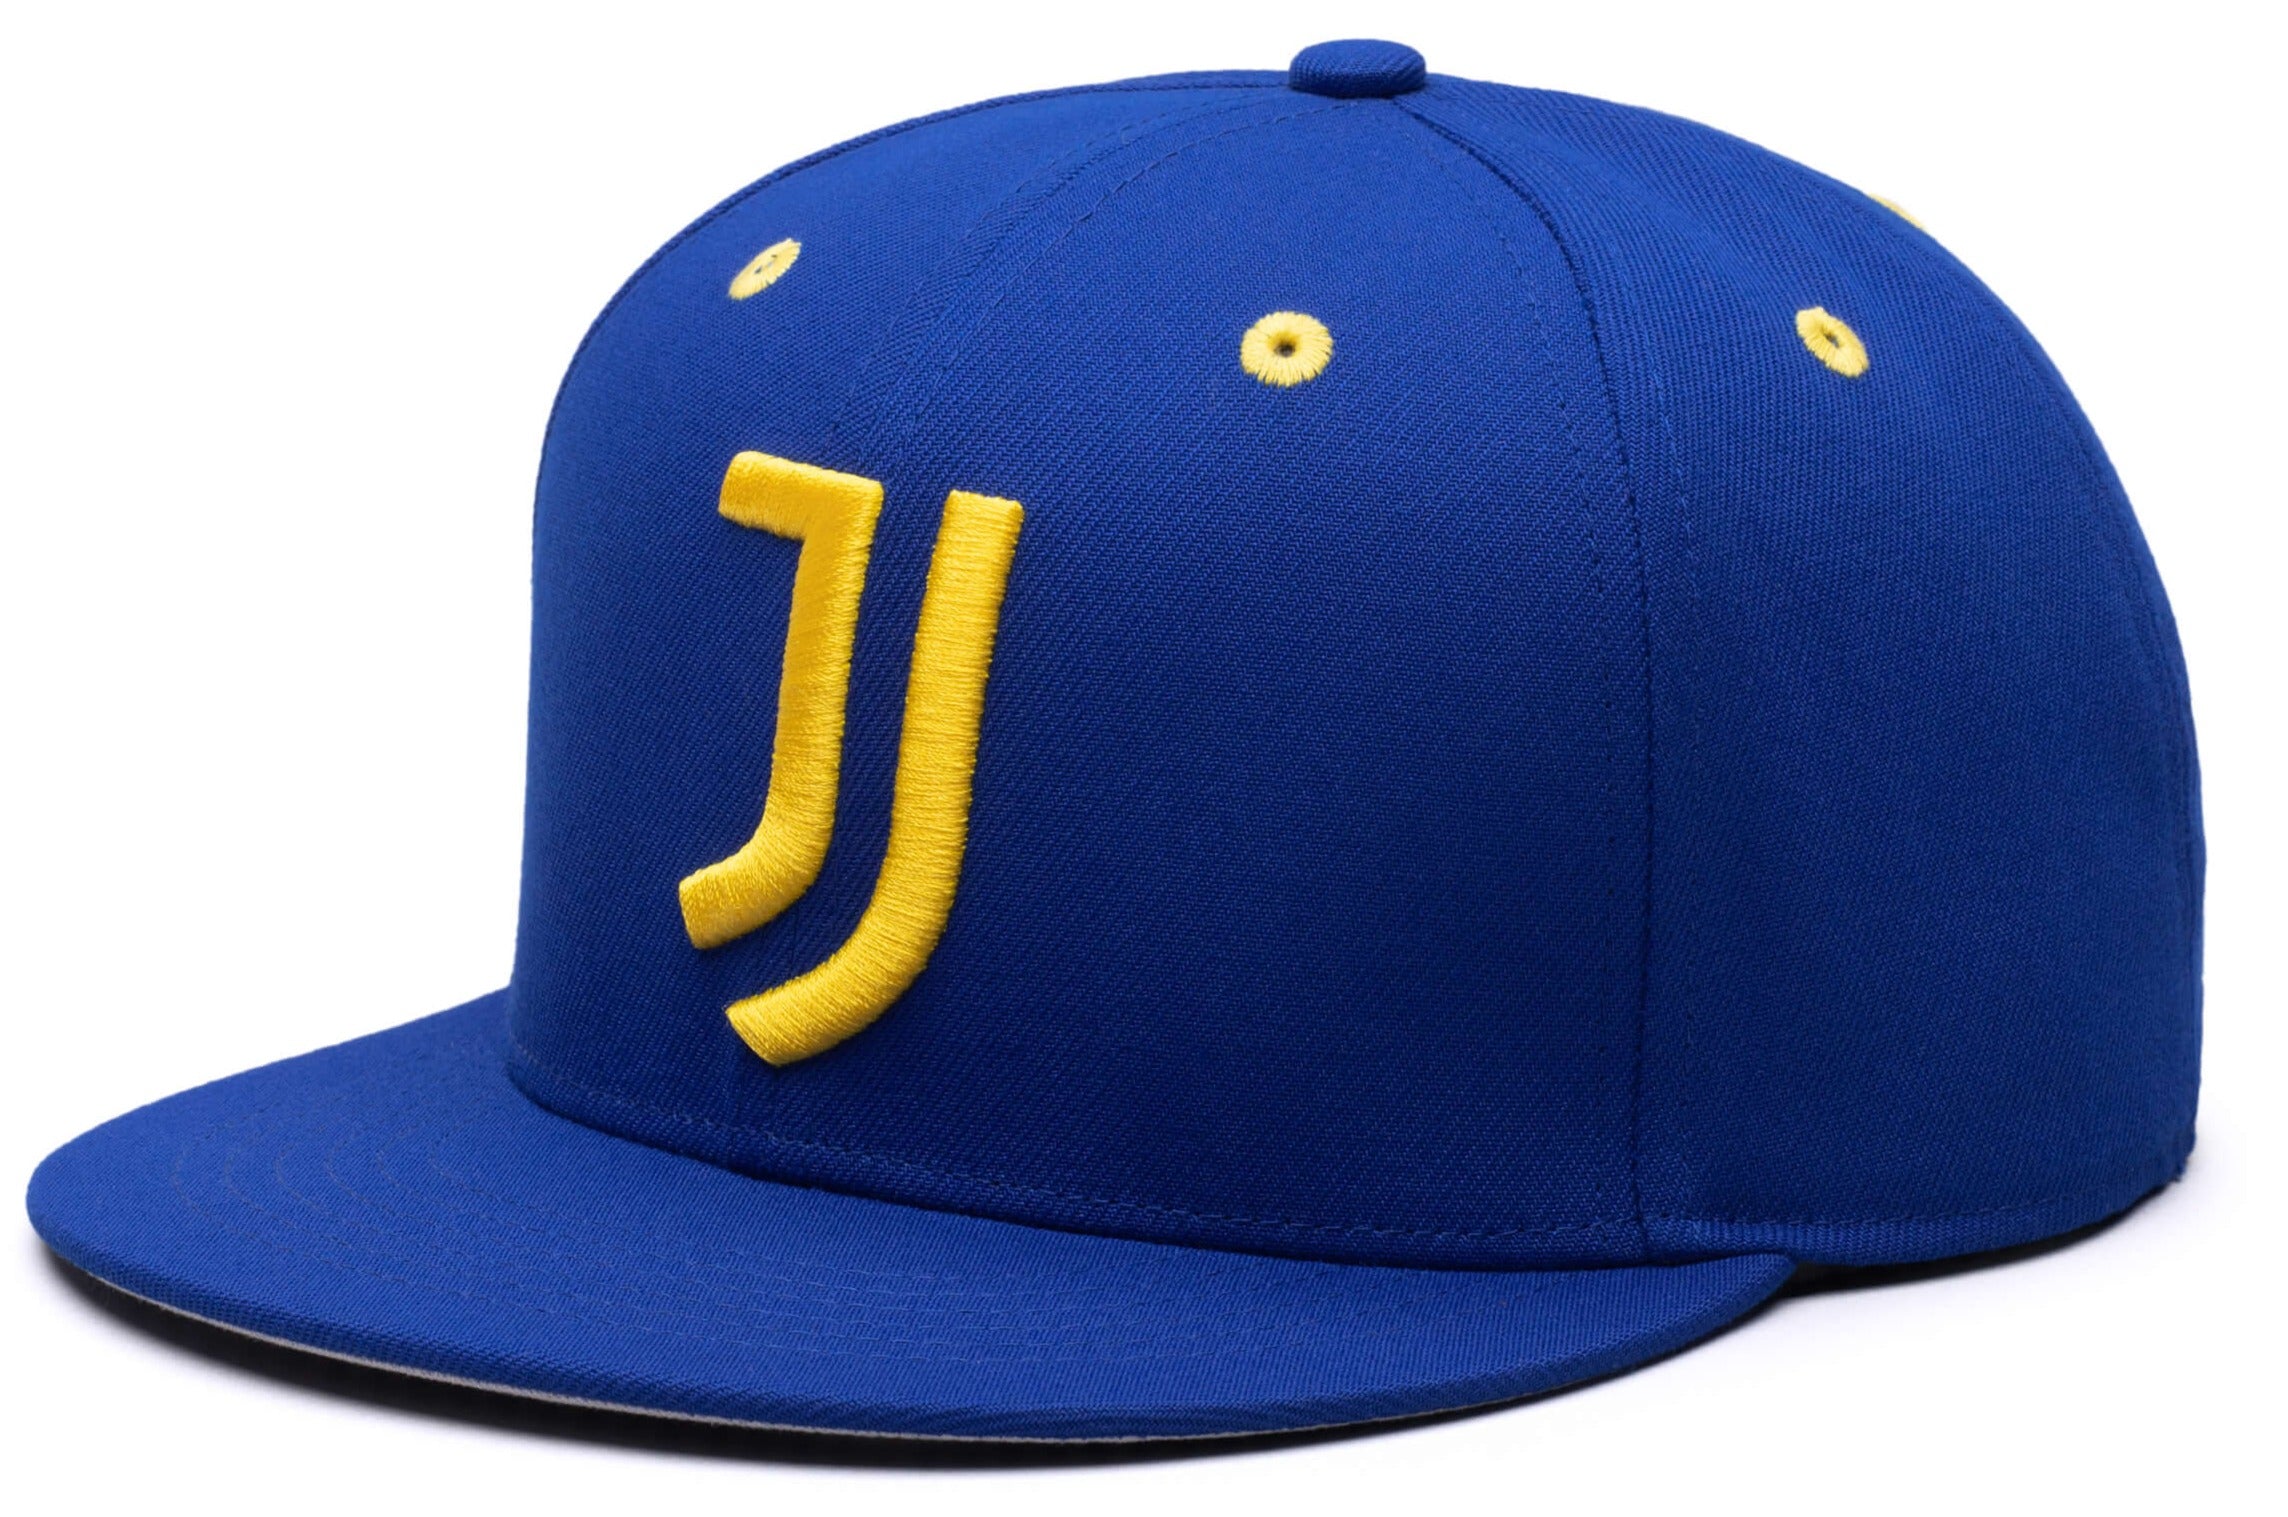 FI COLLECTION JUVENTUS RETRO CAPSULE SNAPBACK HAT-CALMING BLUE